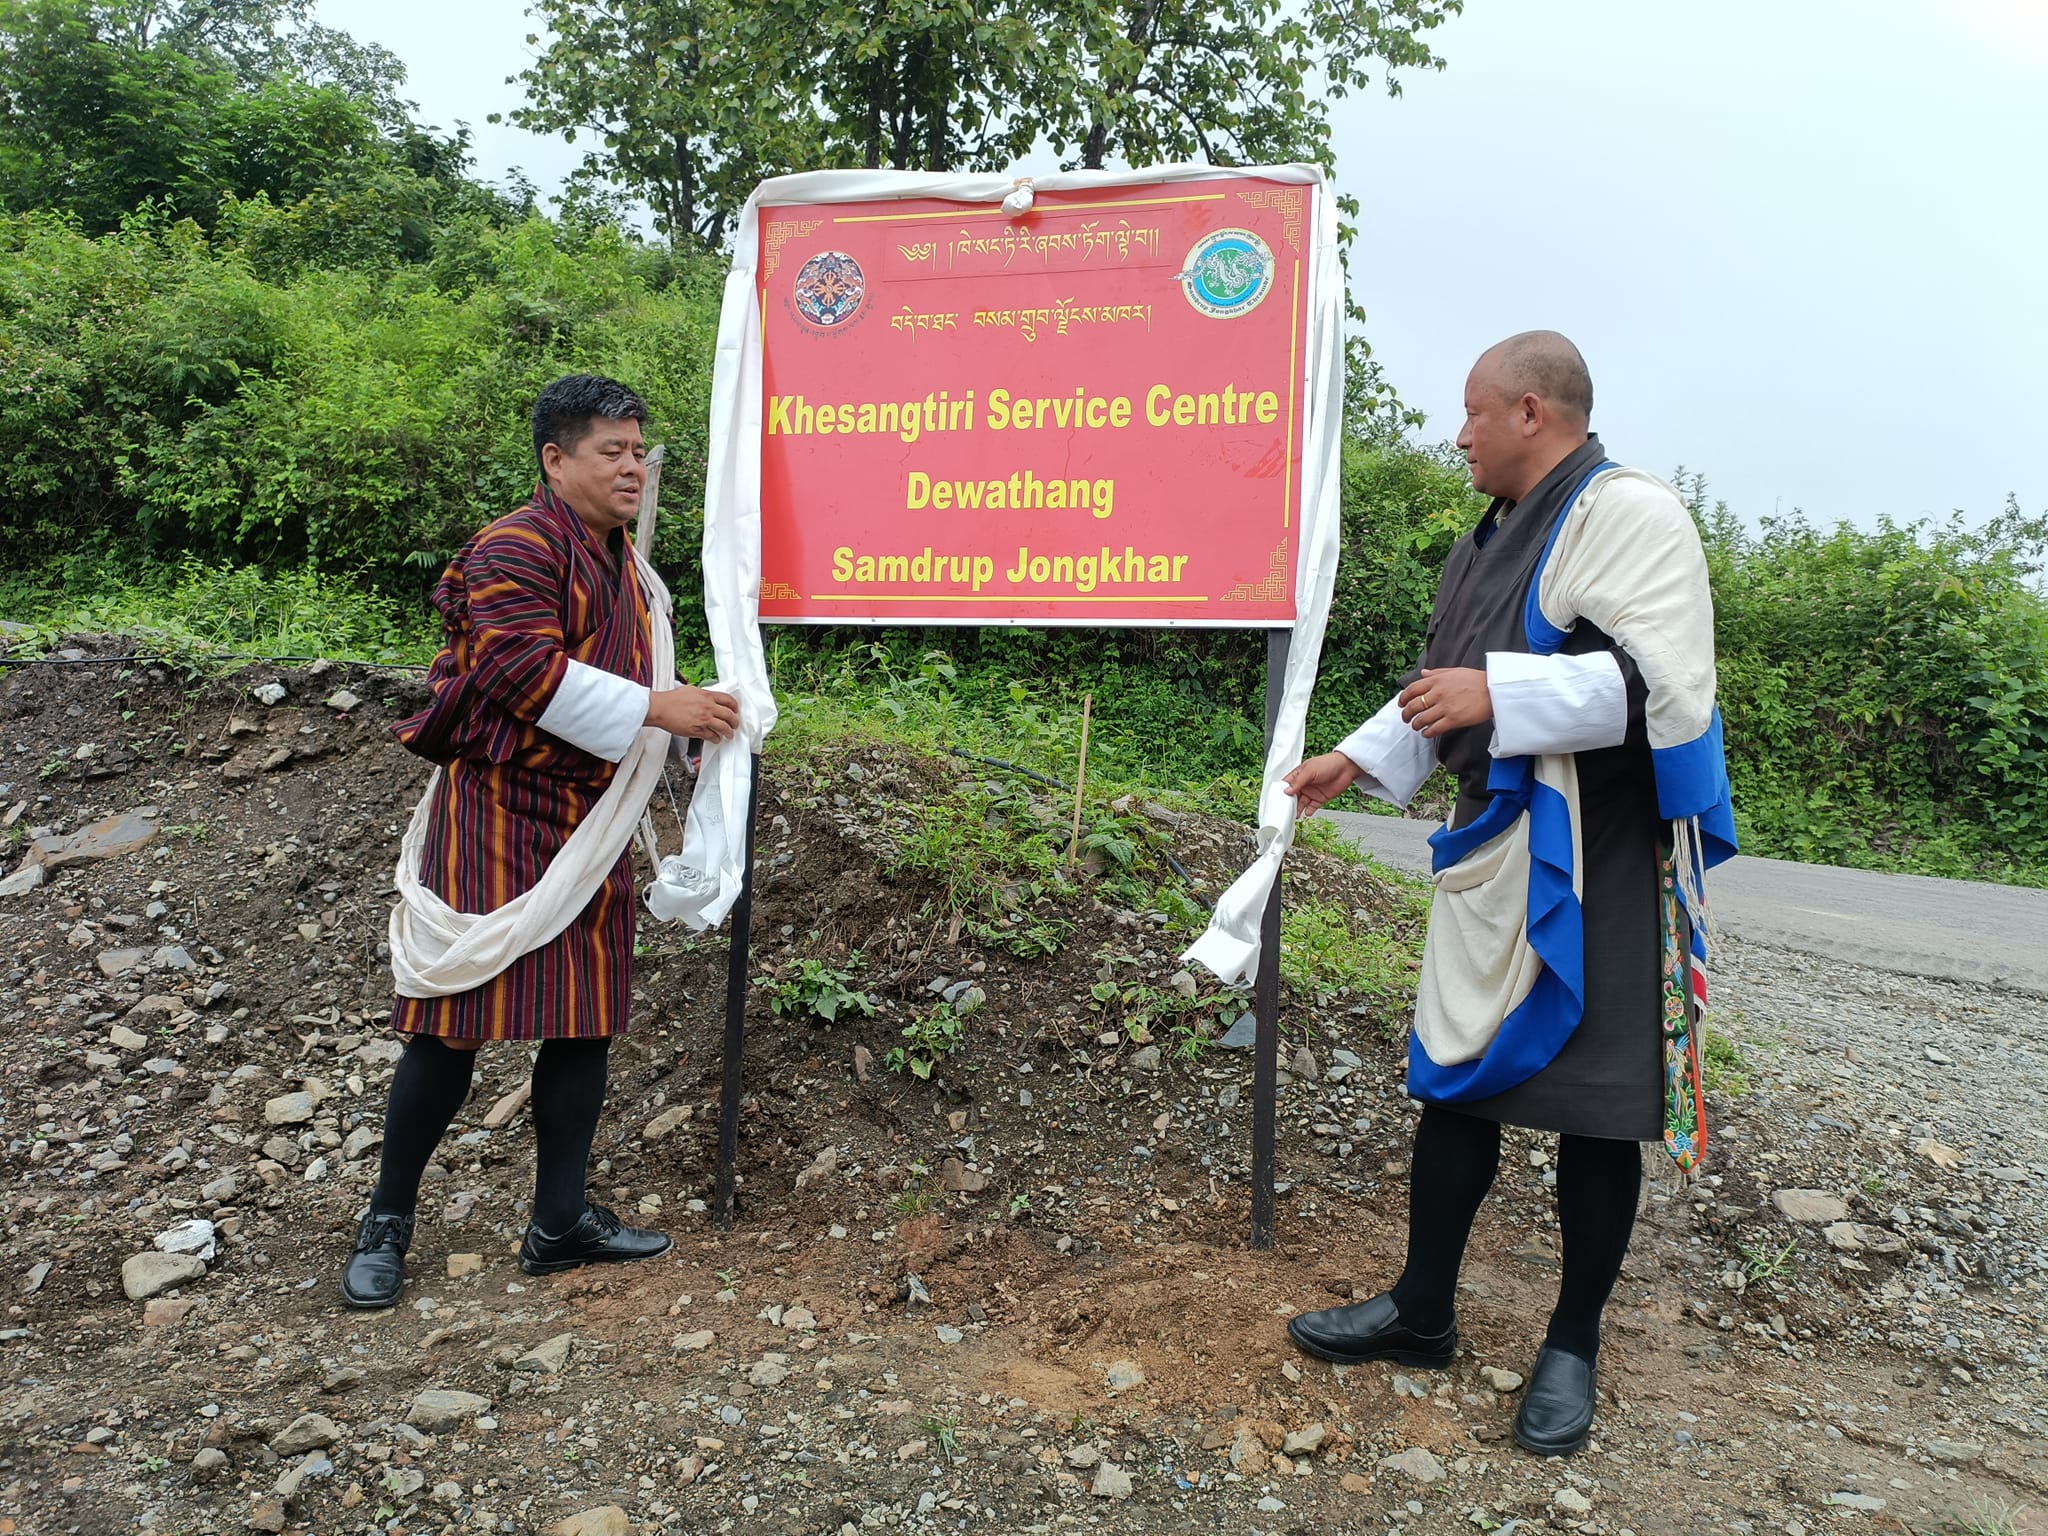 opening cermony of khesangtiri service centre